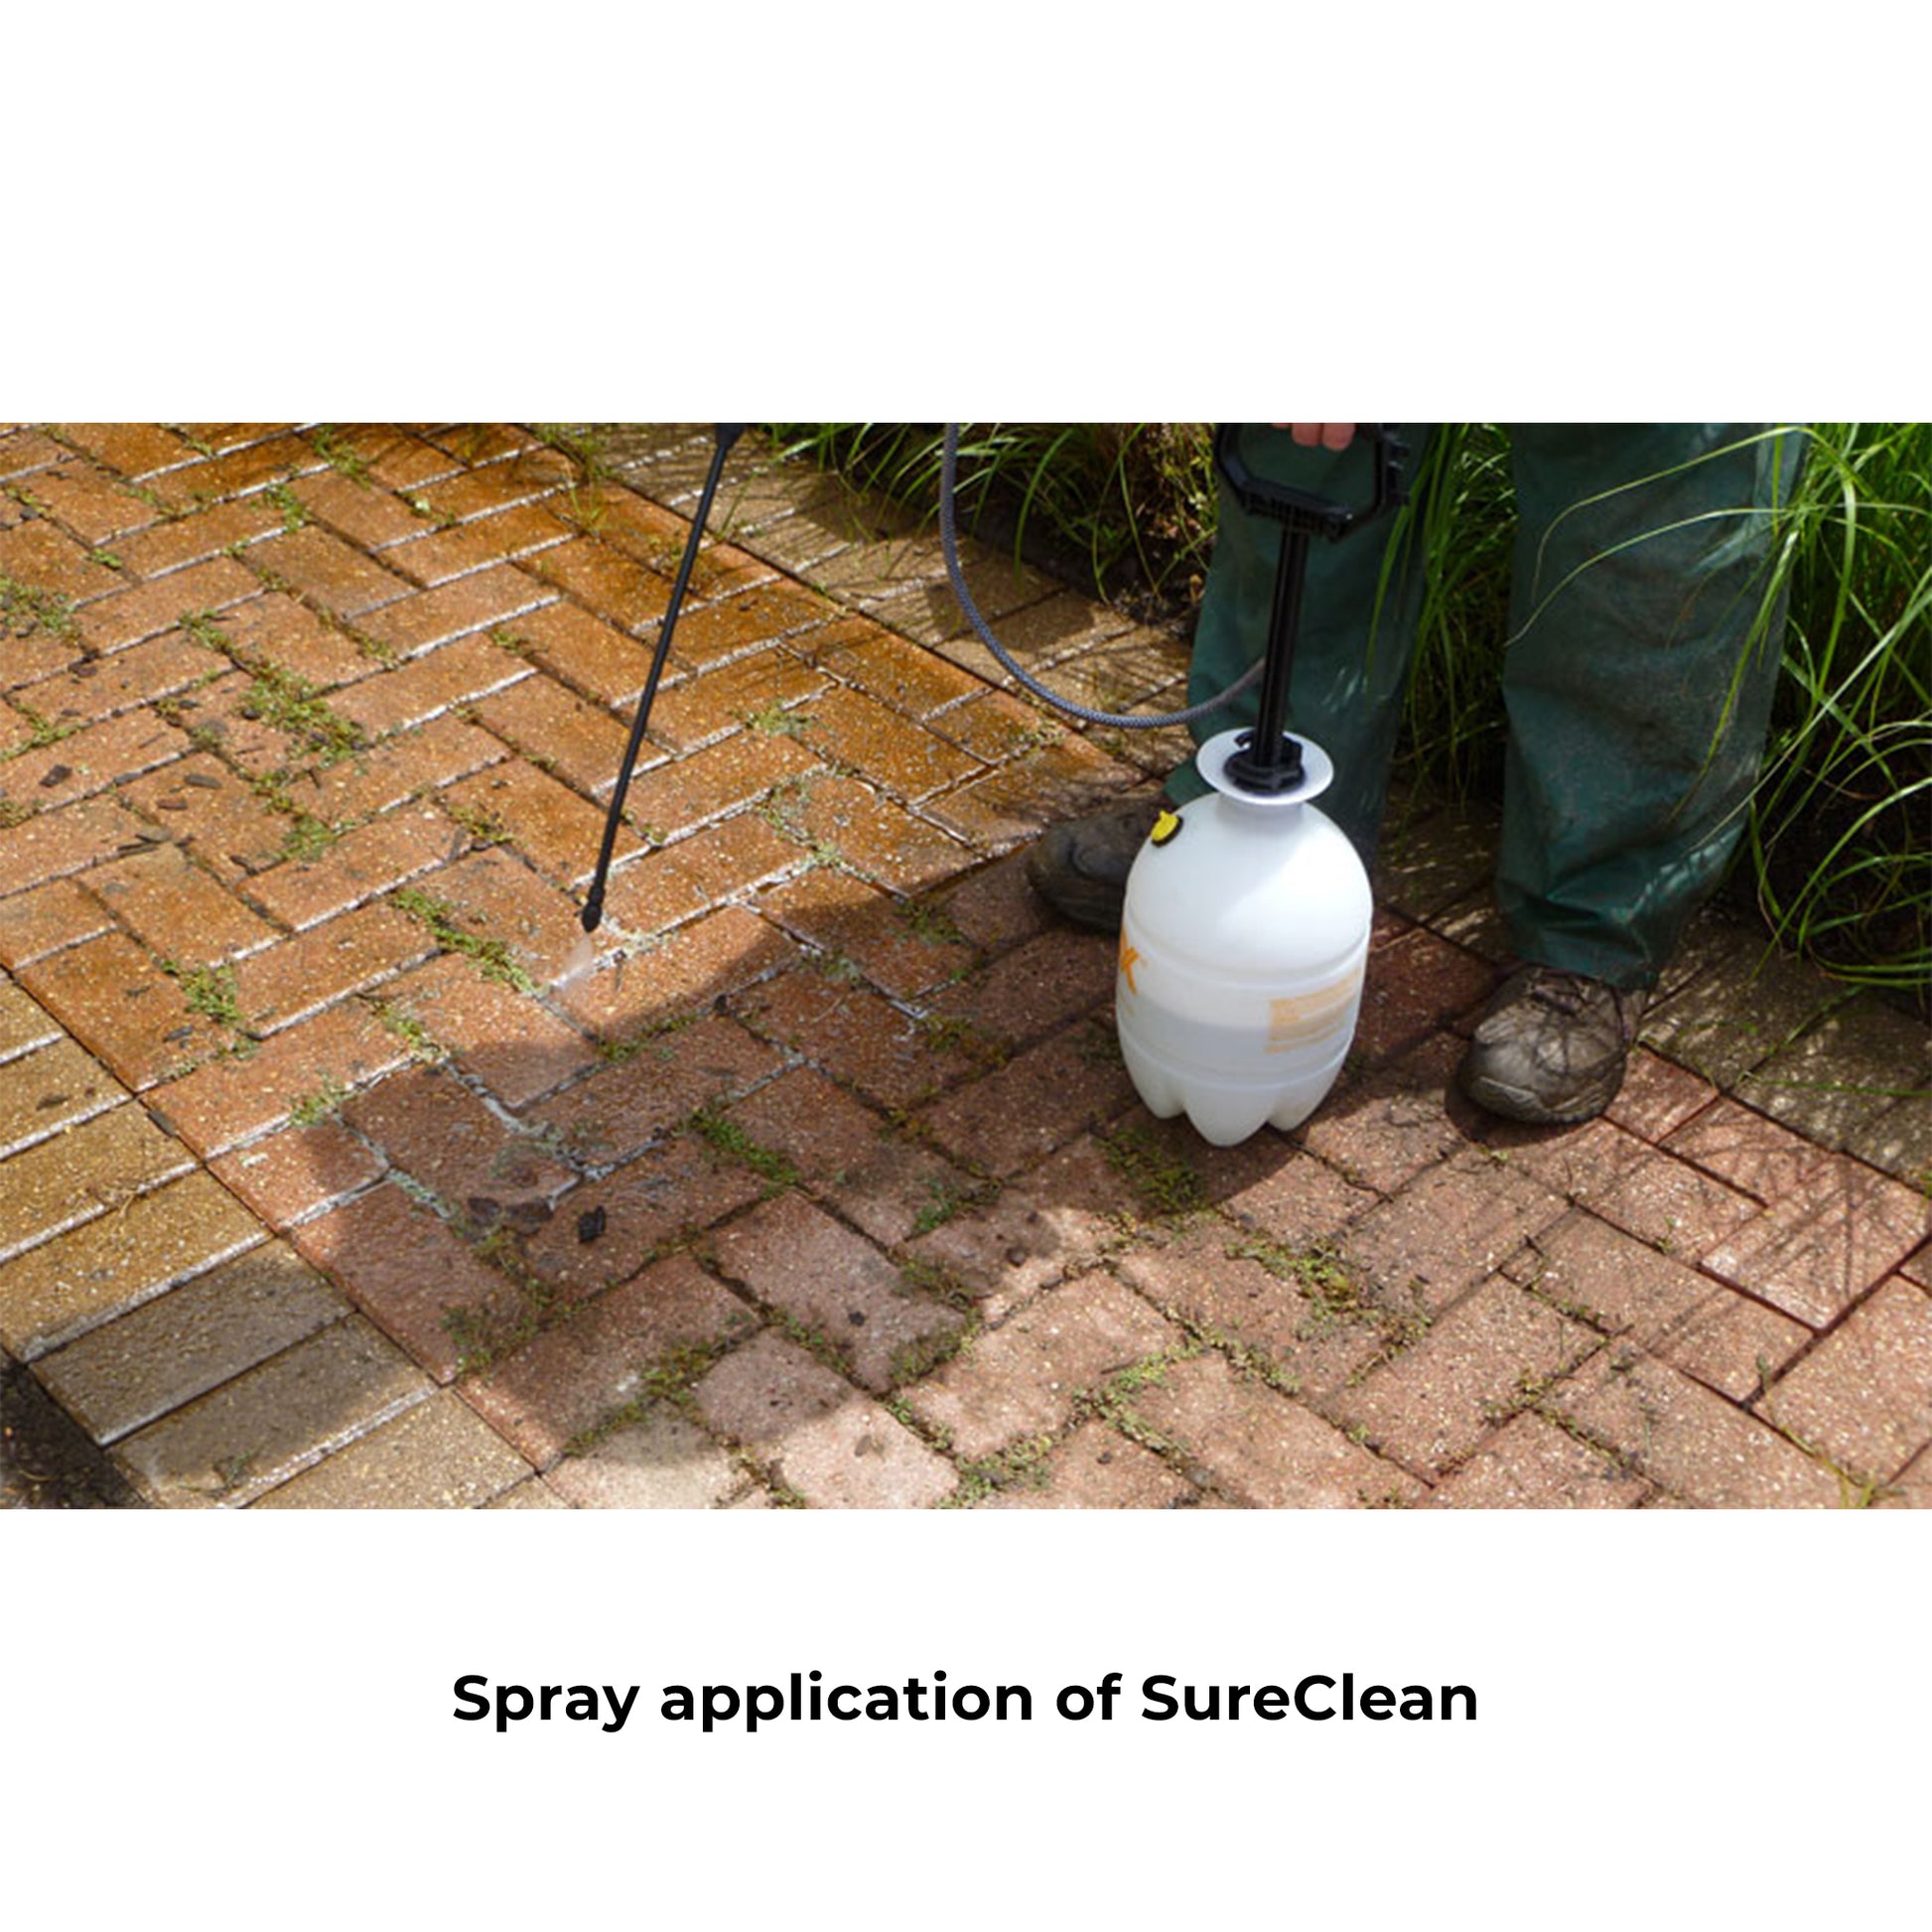 Surebond SureClean - Deep Penetrating Multi-Use Cleaner